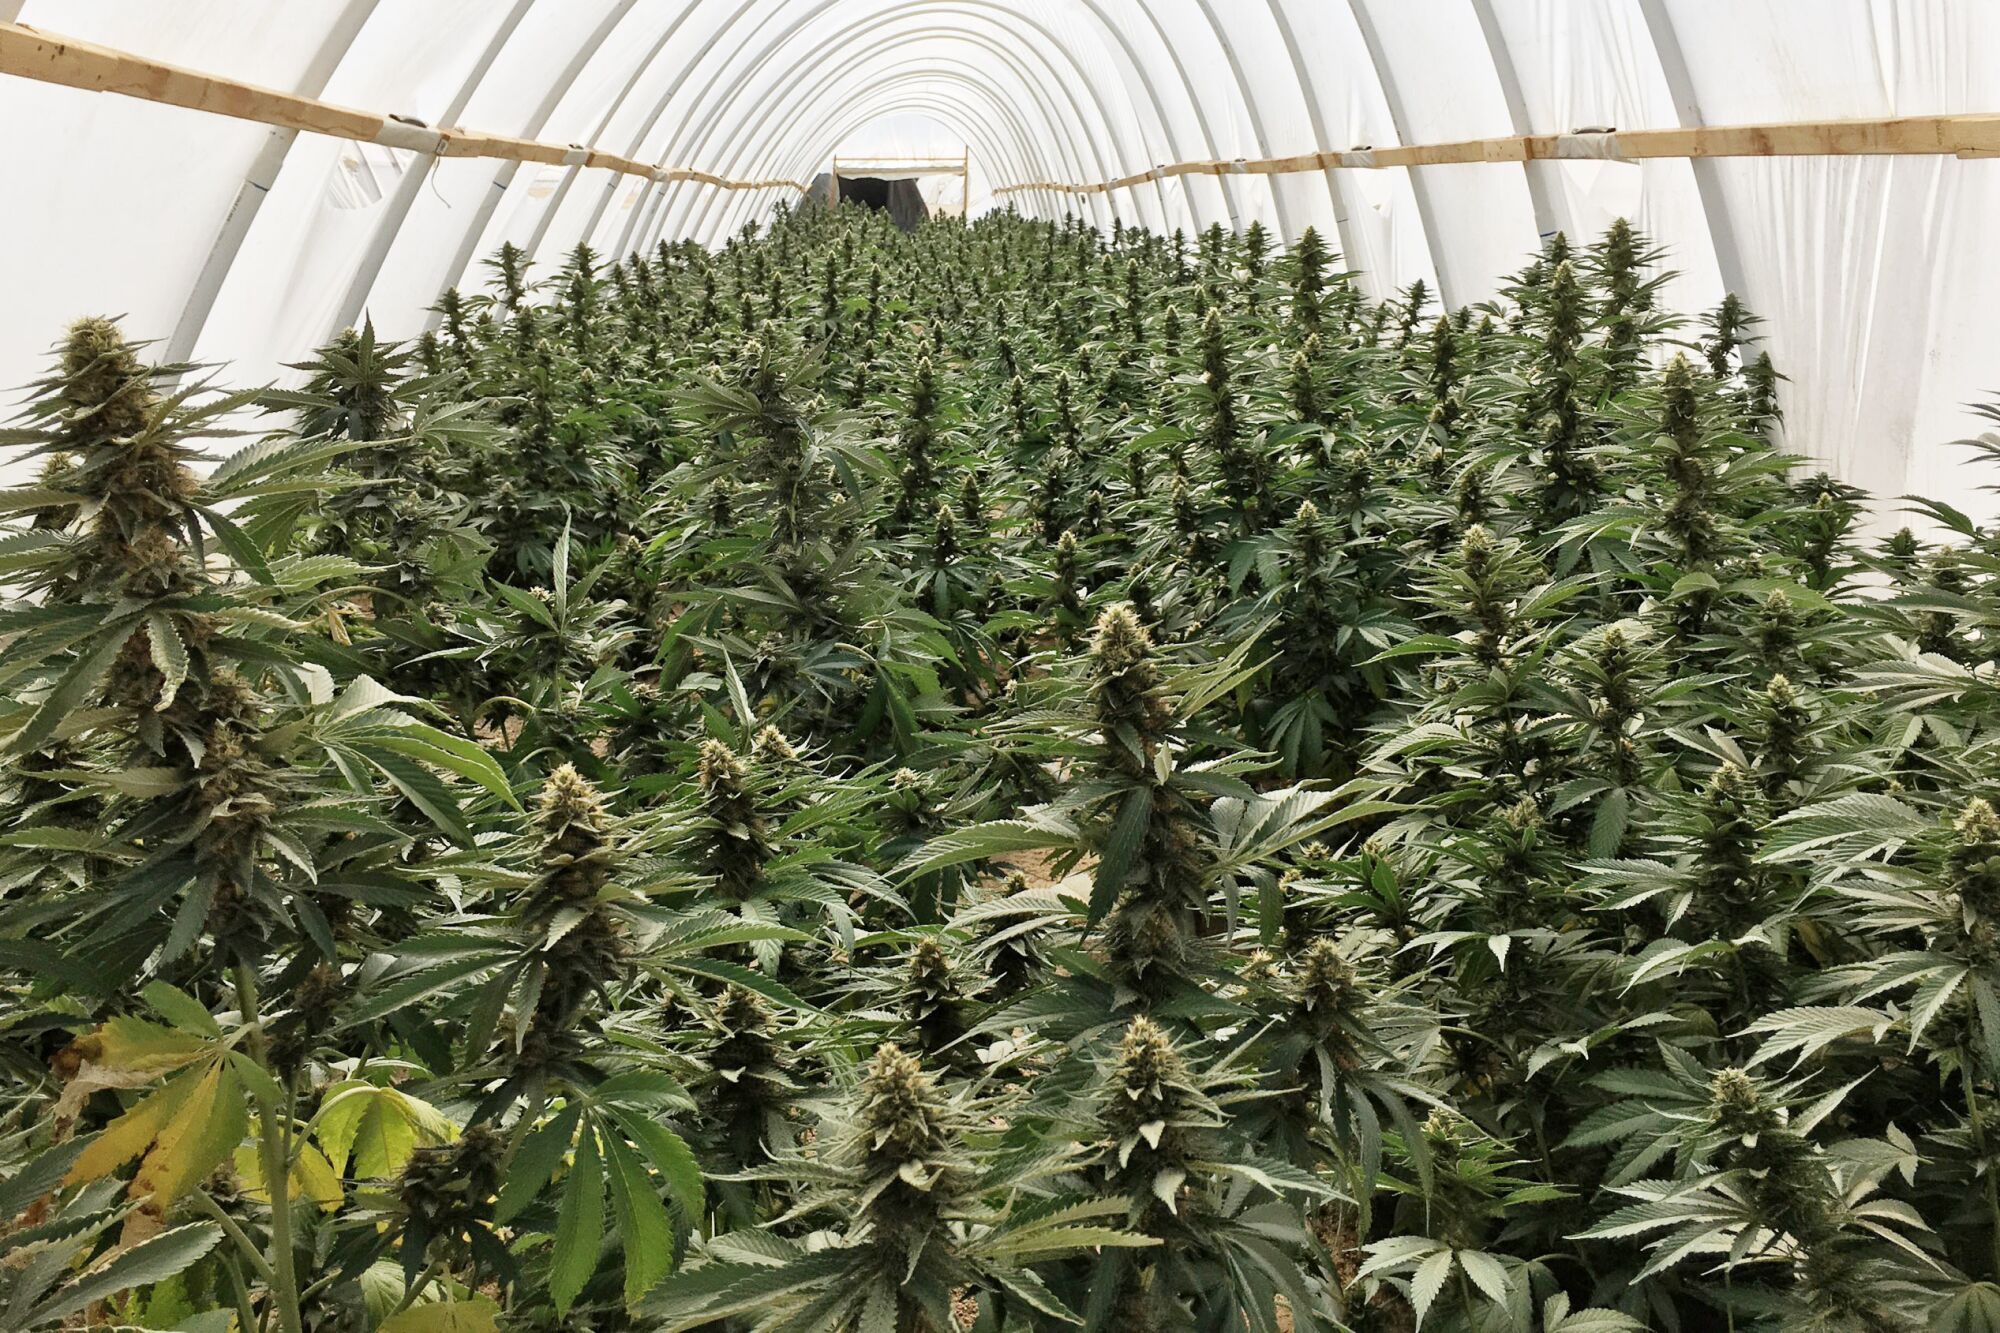 Marijuana plants fill the interior of a plastic covered greenhouse